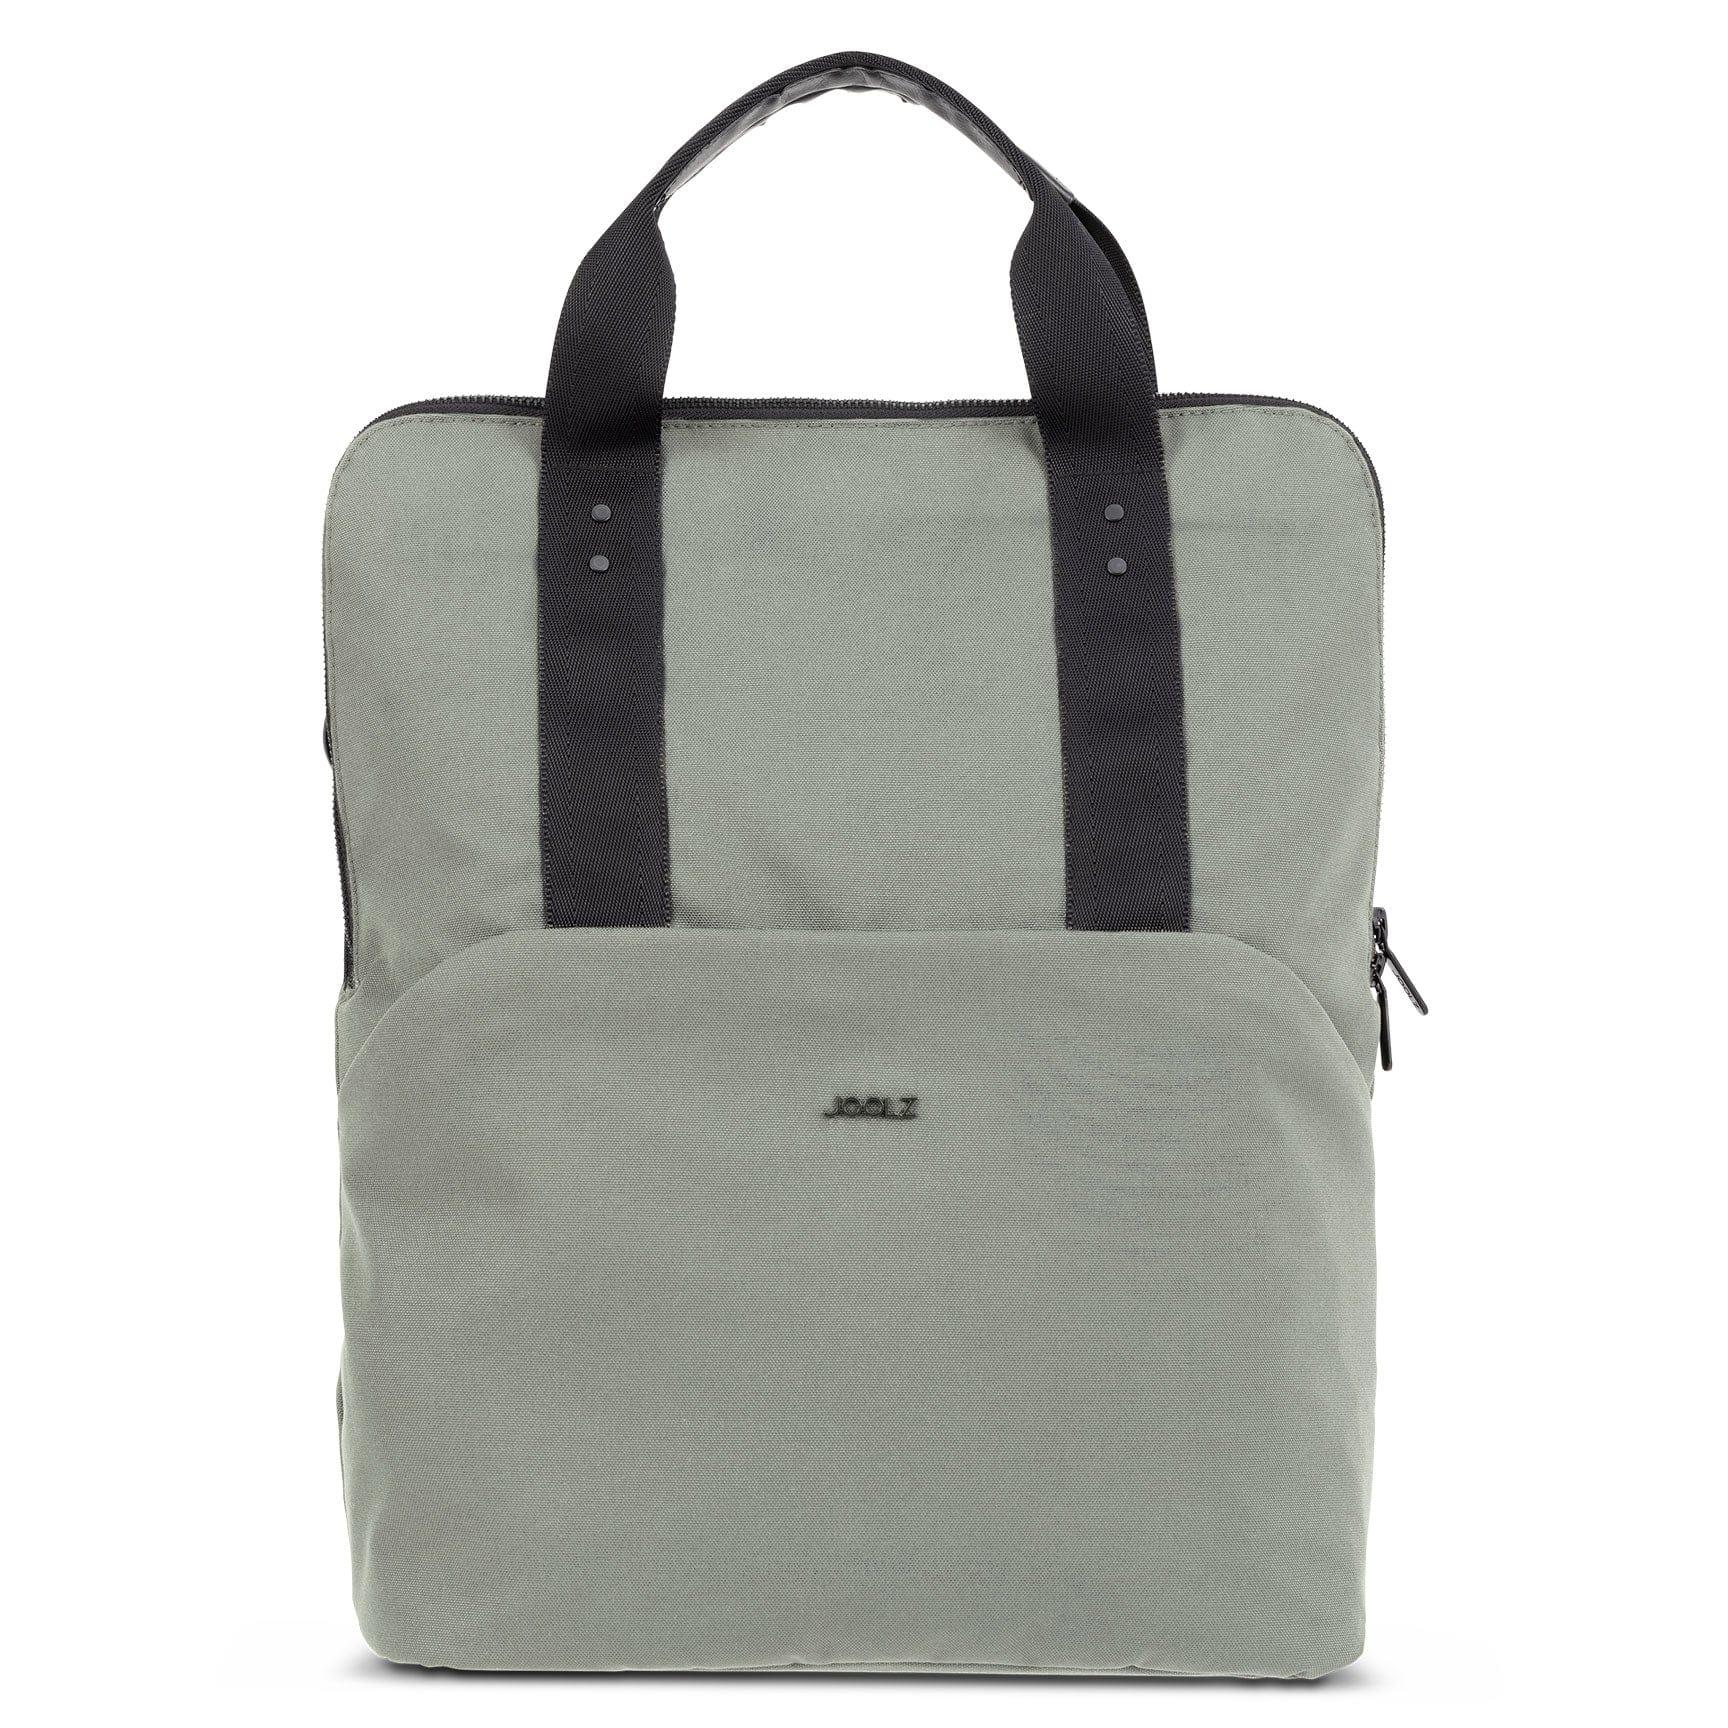 Joolz Backpack in Mindful Sage Green 530186